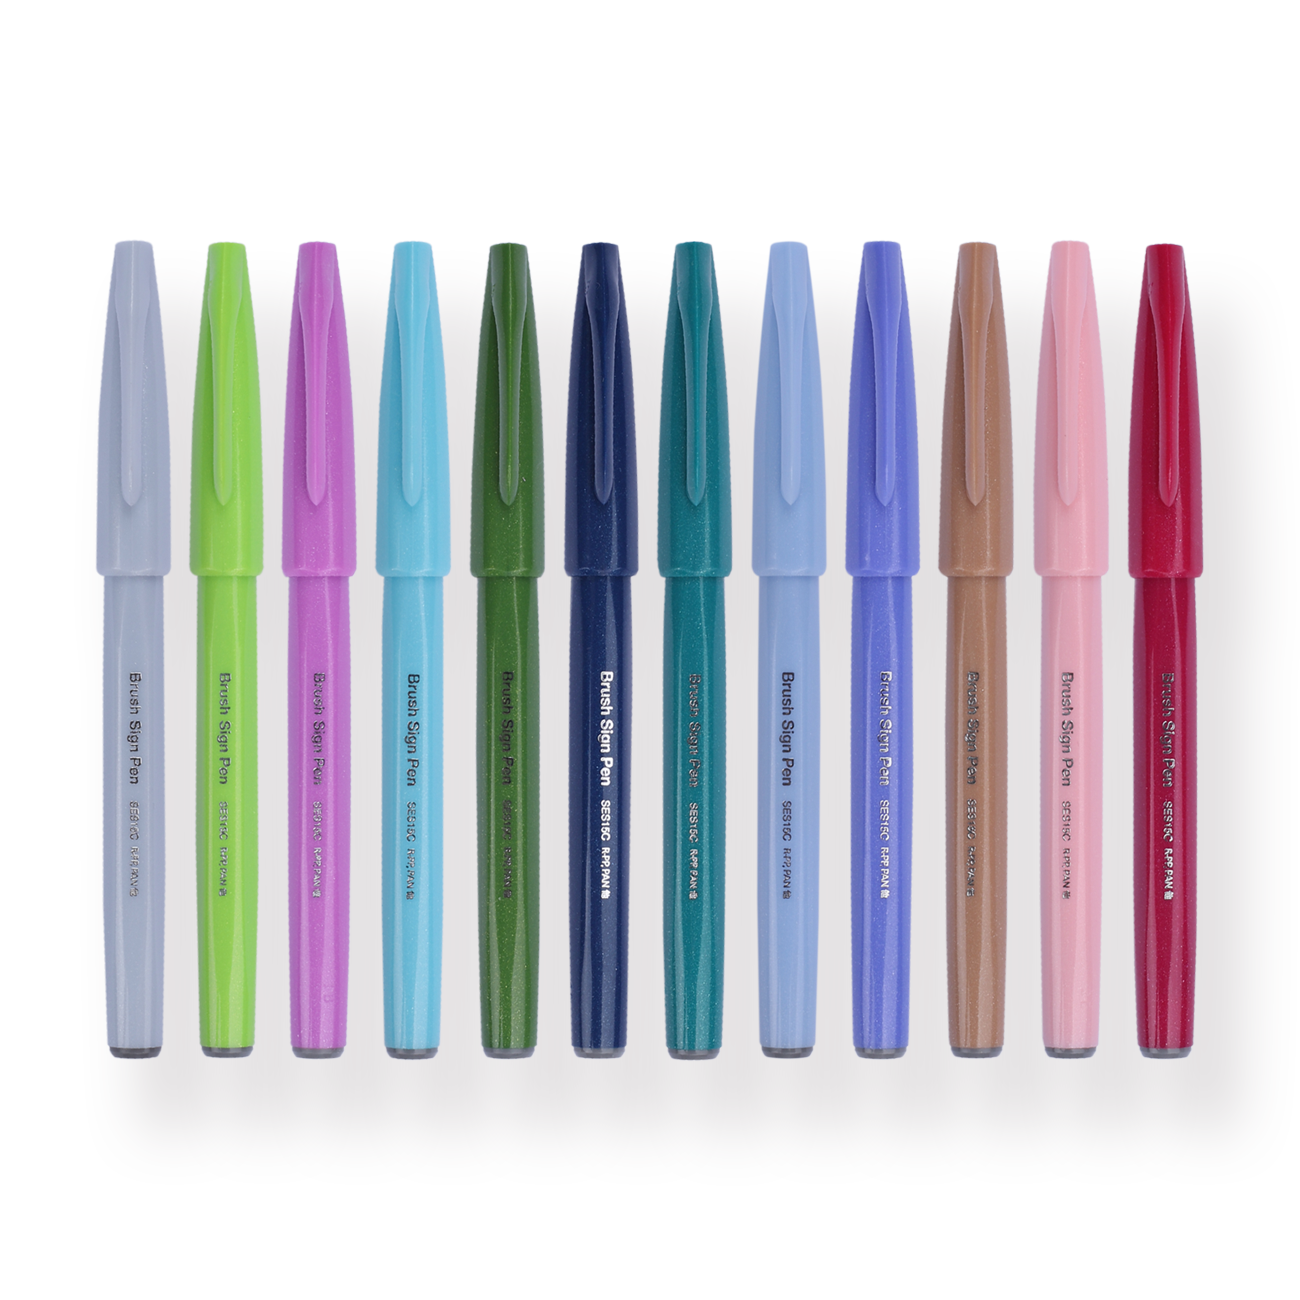  Pentel Art Brush, Color Brush Pens, 18 Color Set